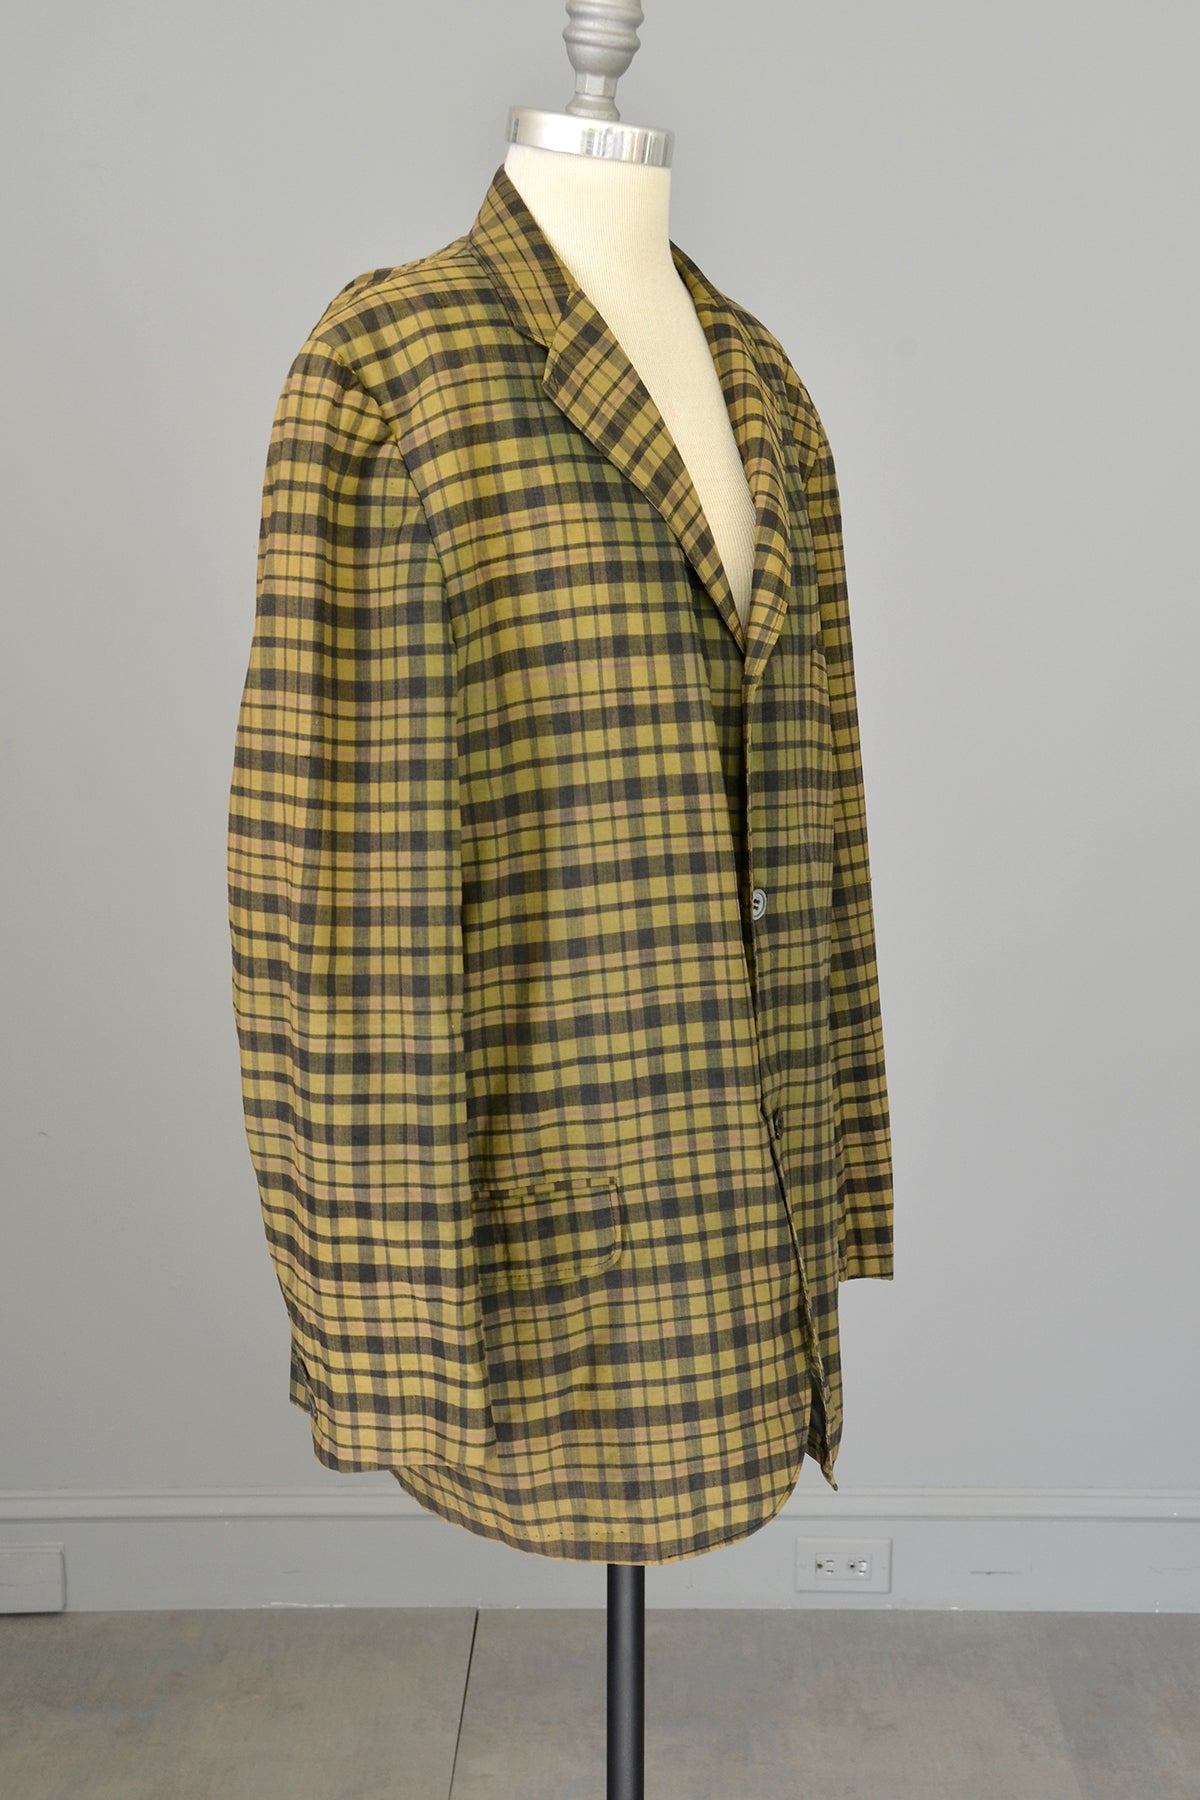 1950s Men's Olive Green Charcoal Grey Plaid Blazer Jacket Coat